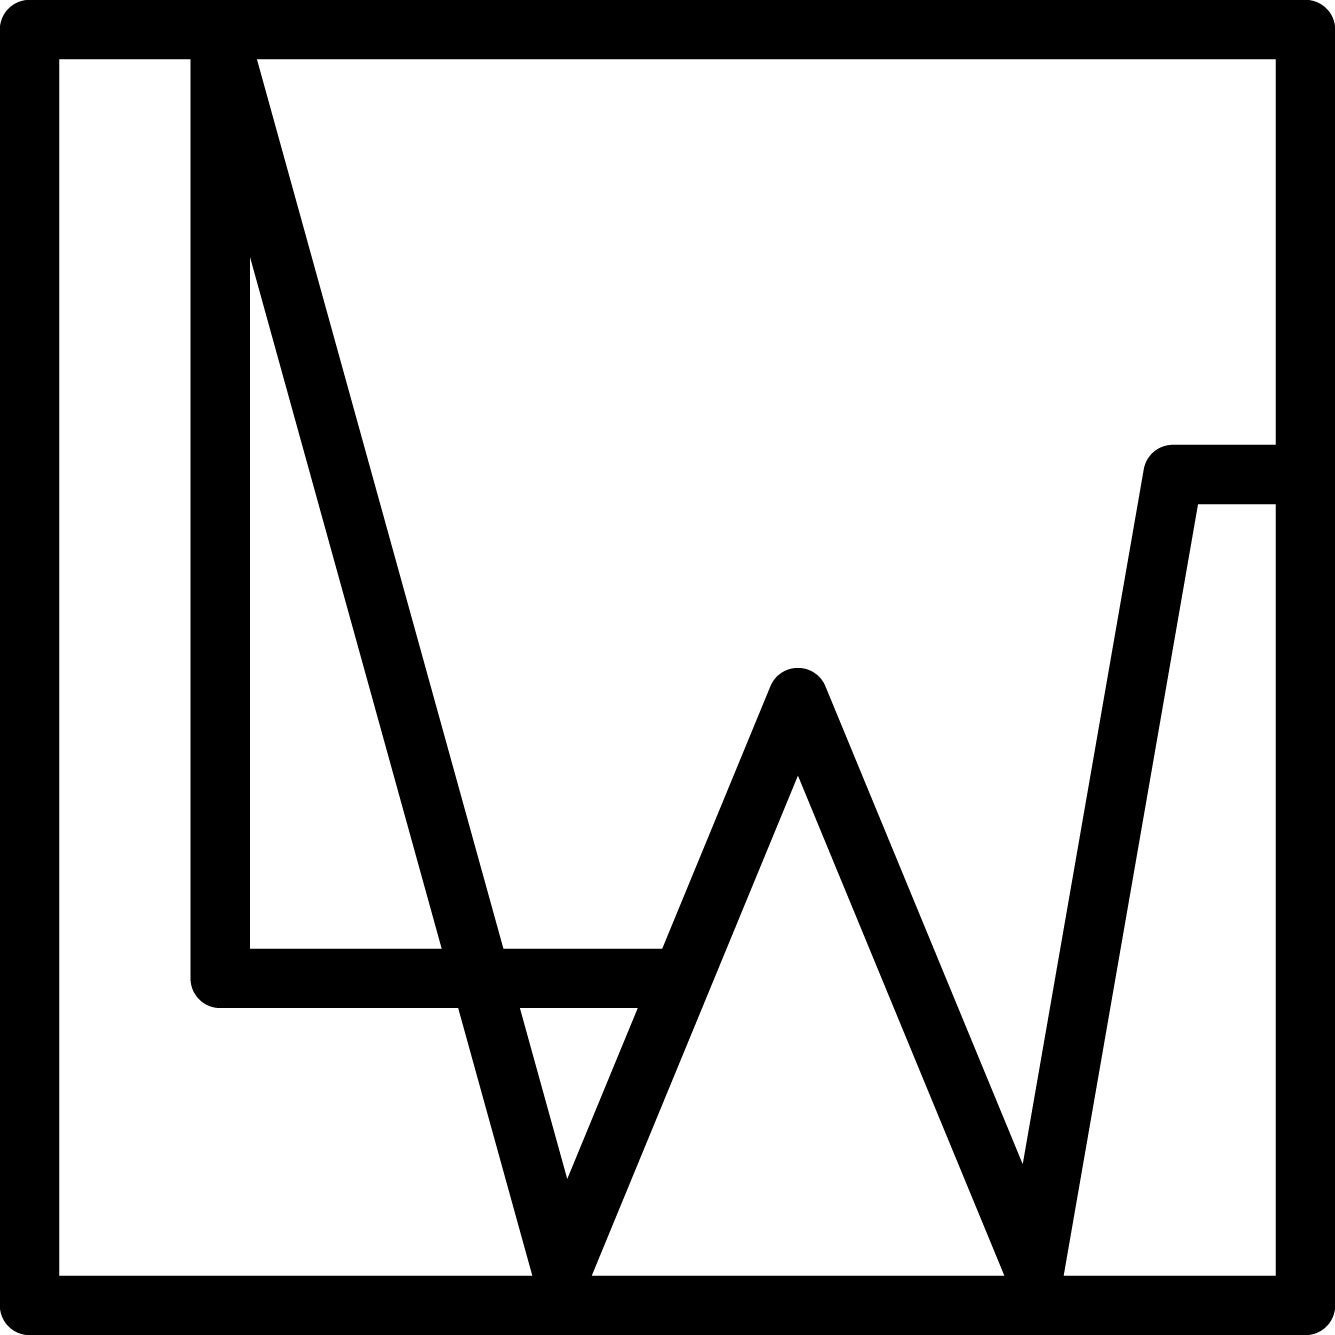 『LW』ブランドロゴ